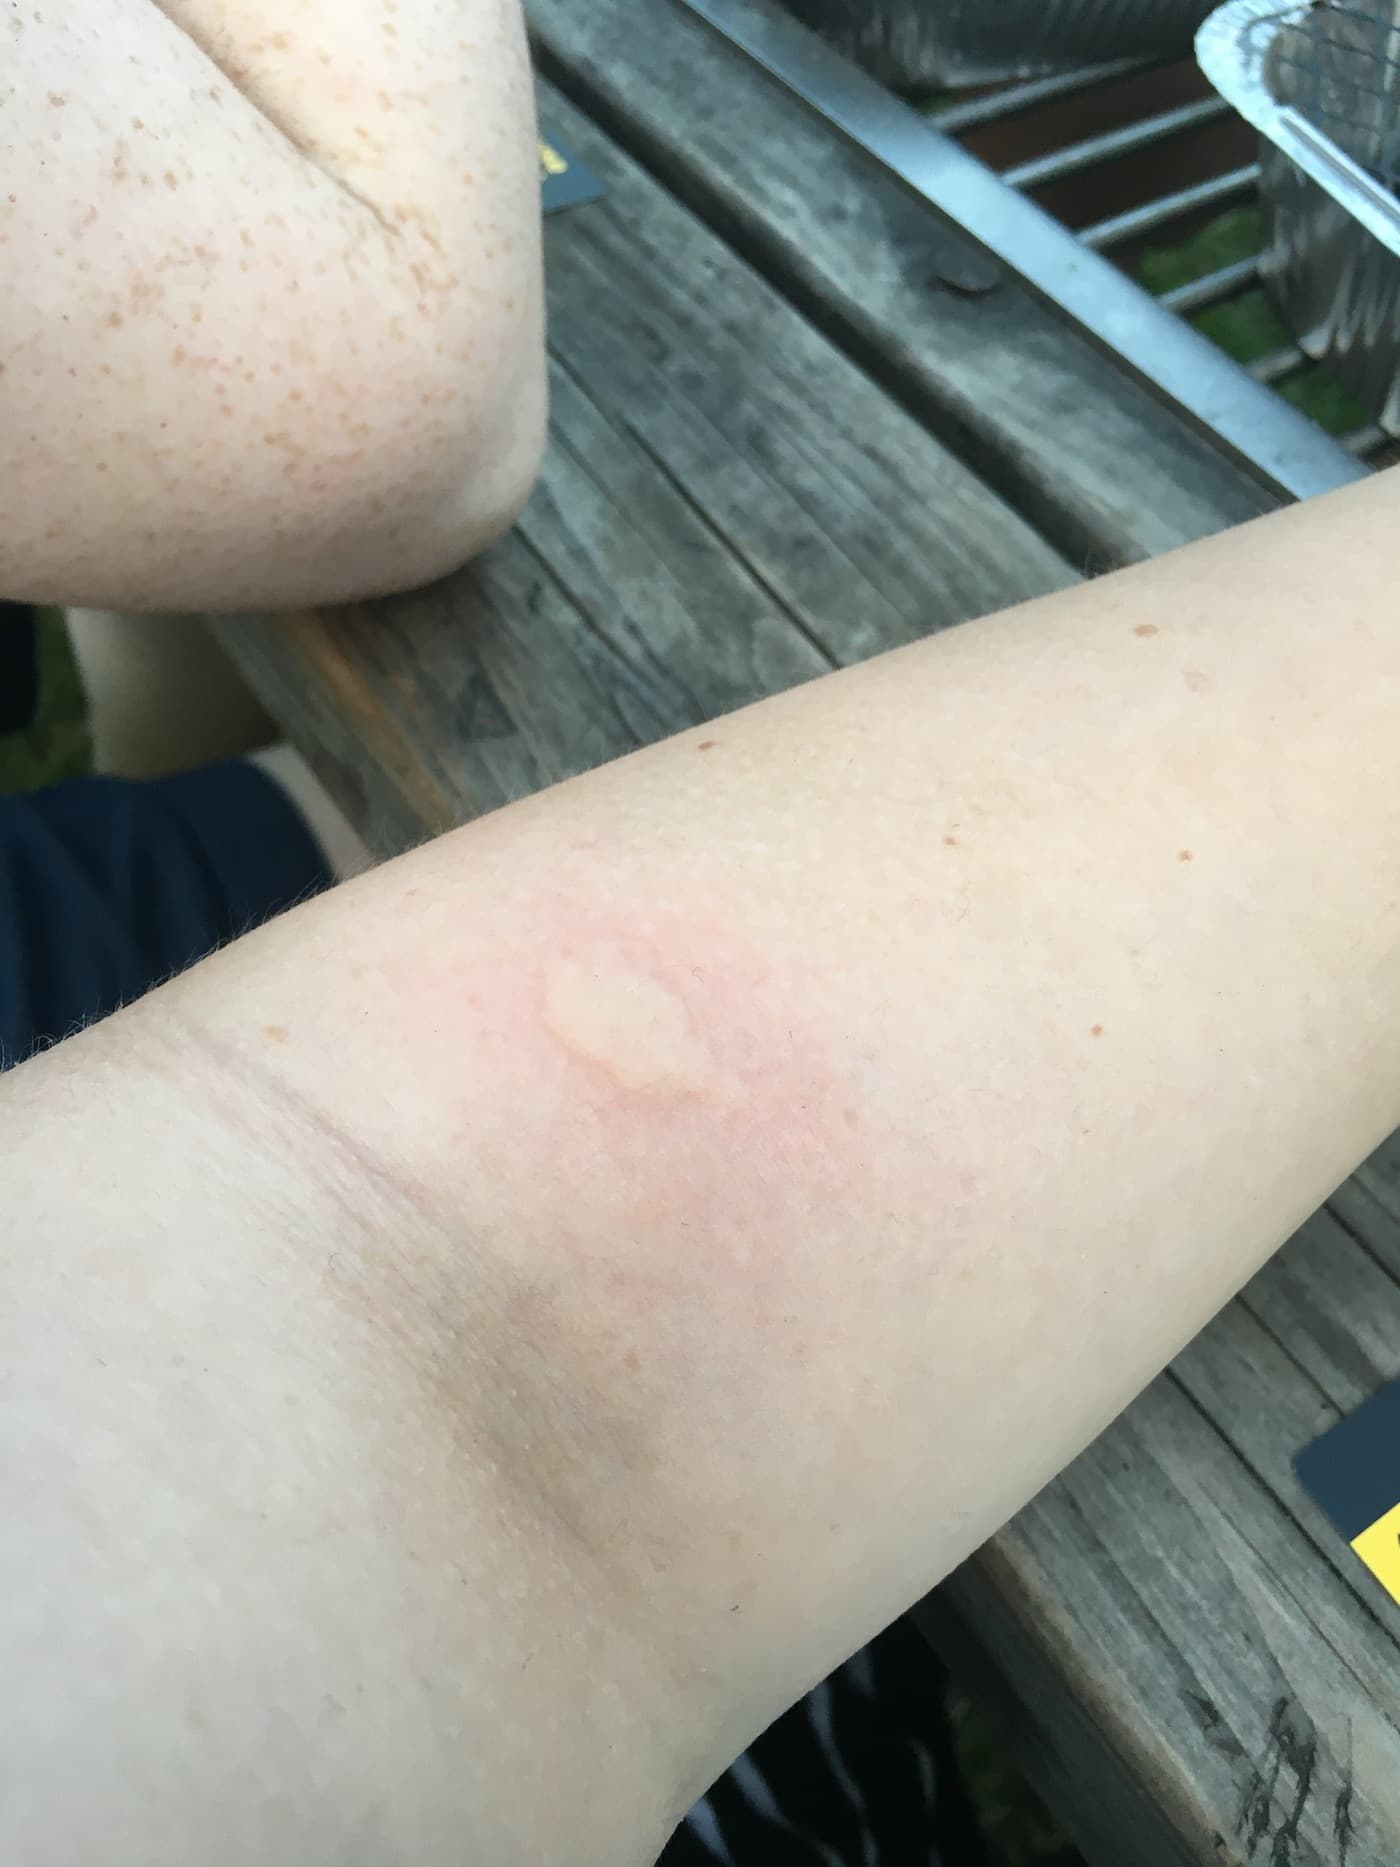 Mosquito bite on my arm allergic reaction 2021